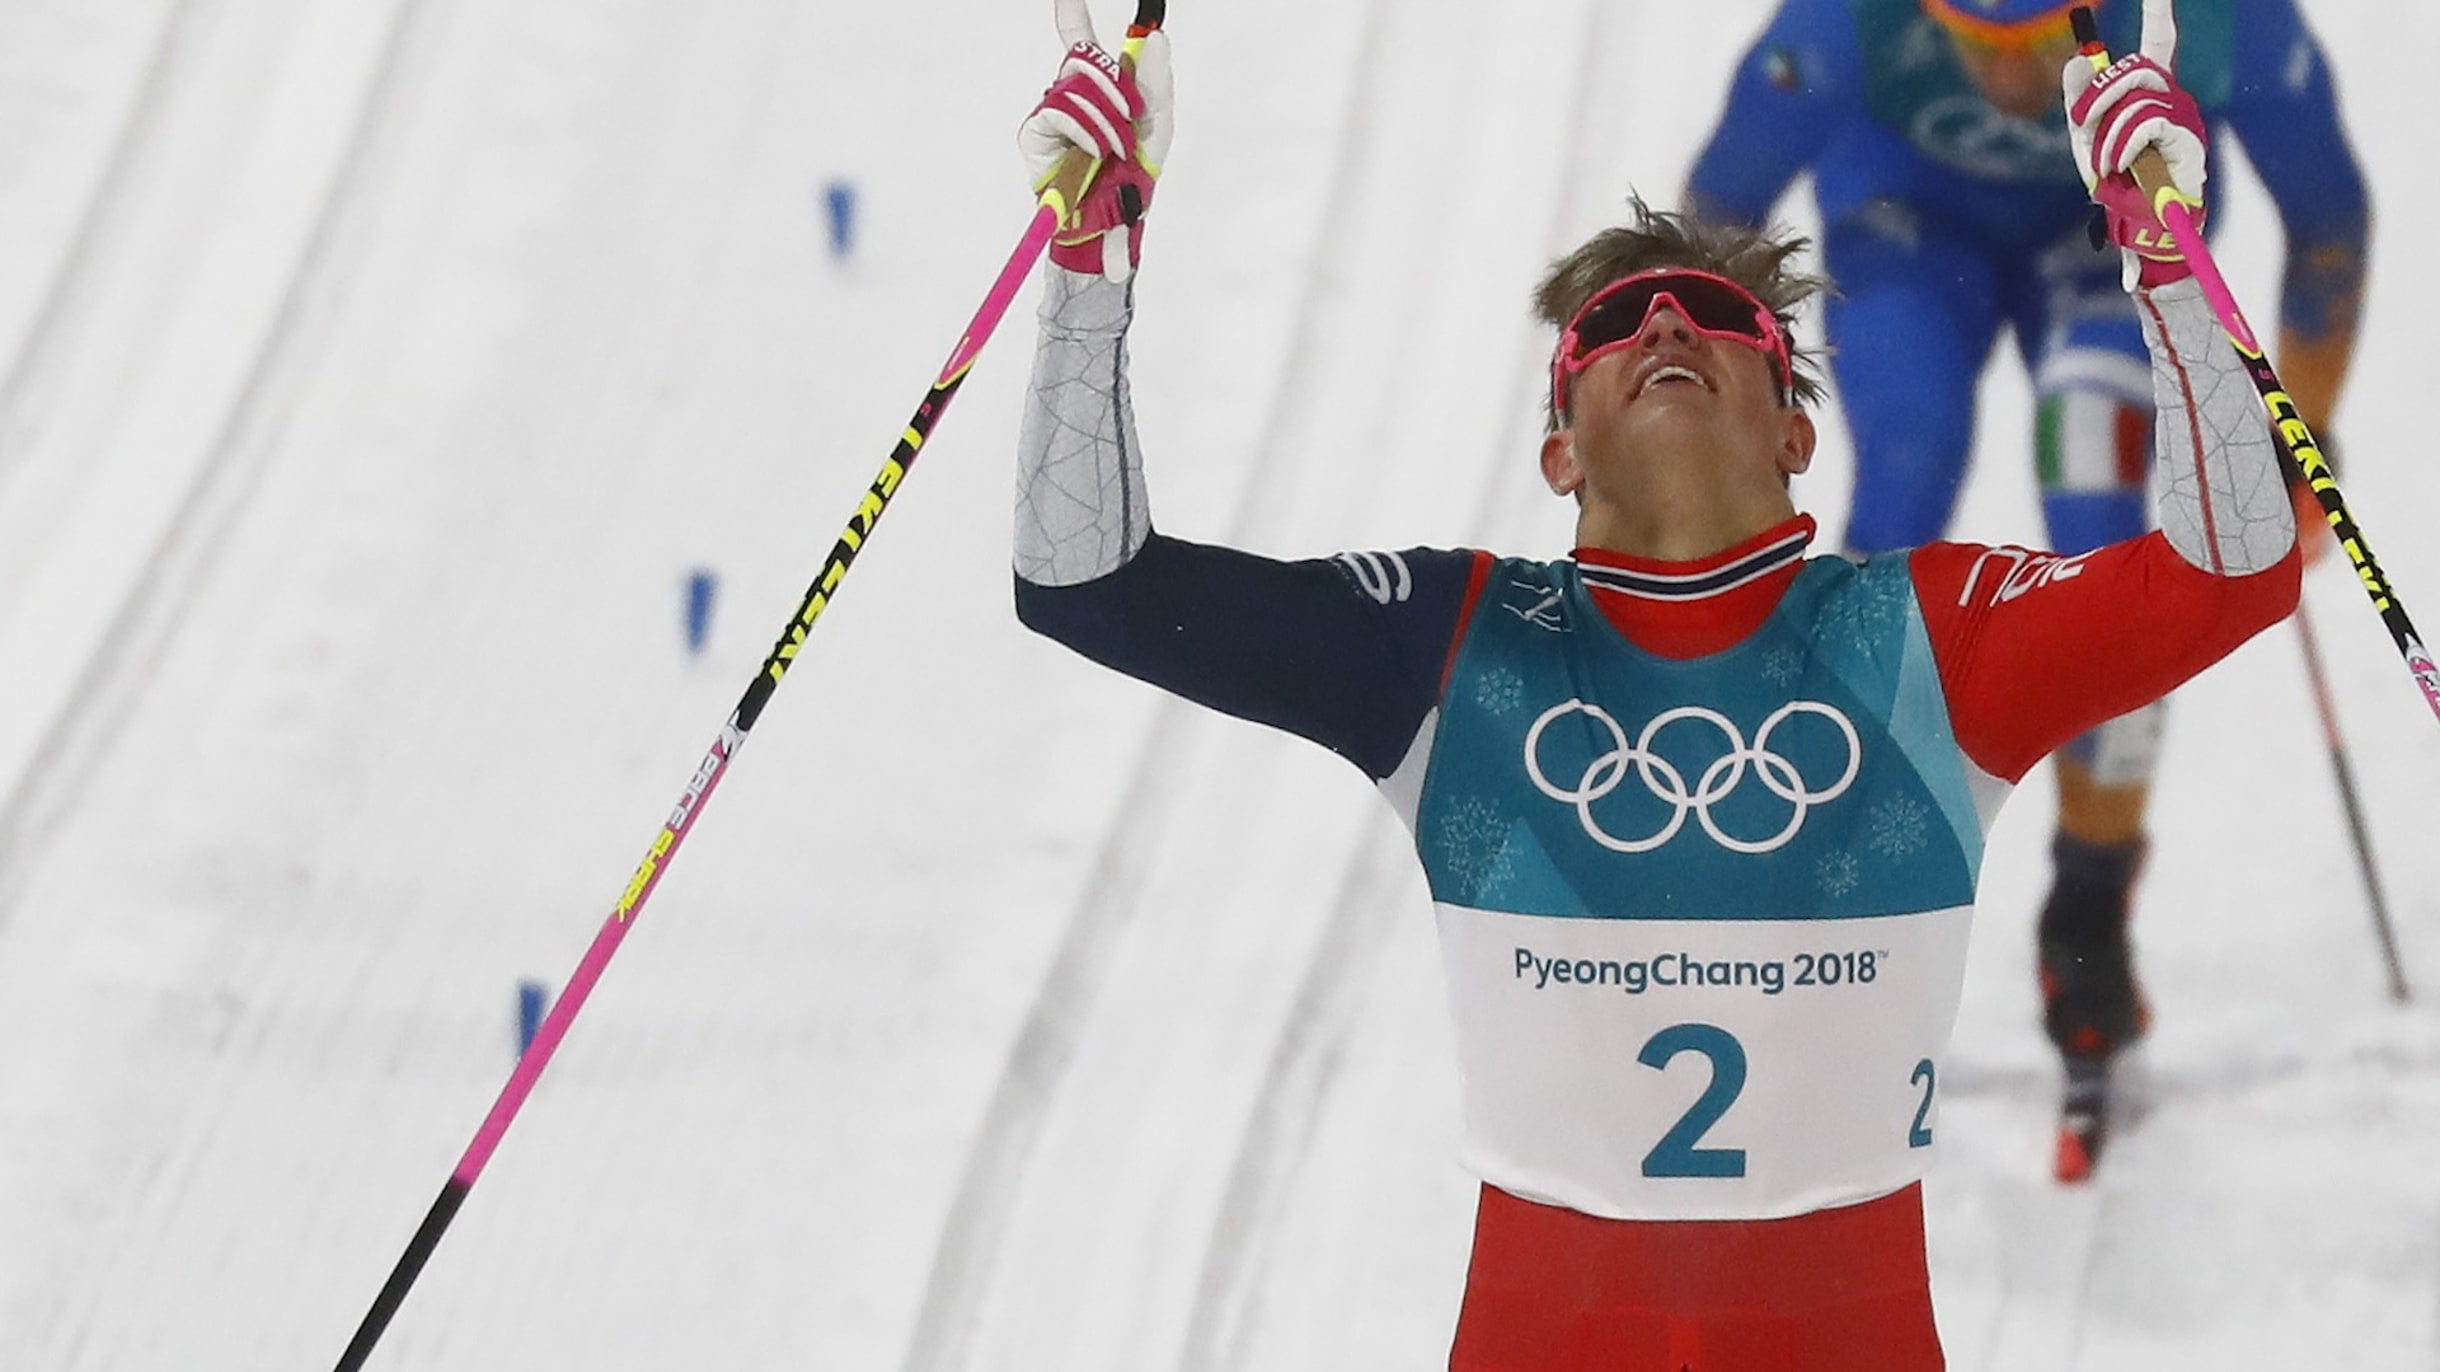 Johannes Klaebo, the Usain Bolt of cross-country skiing